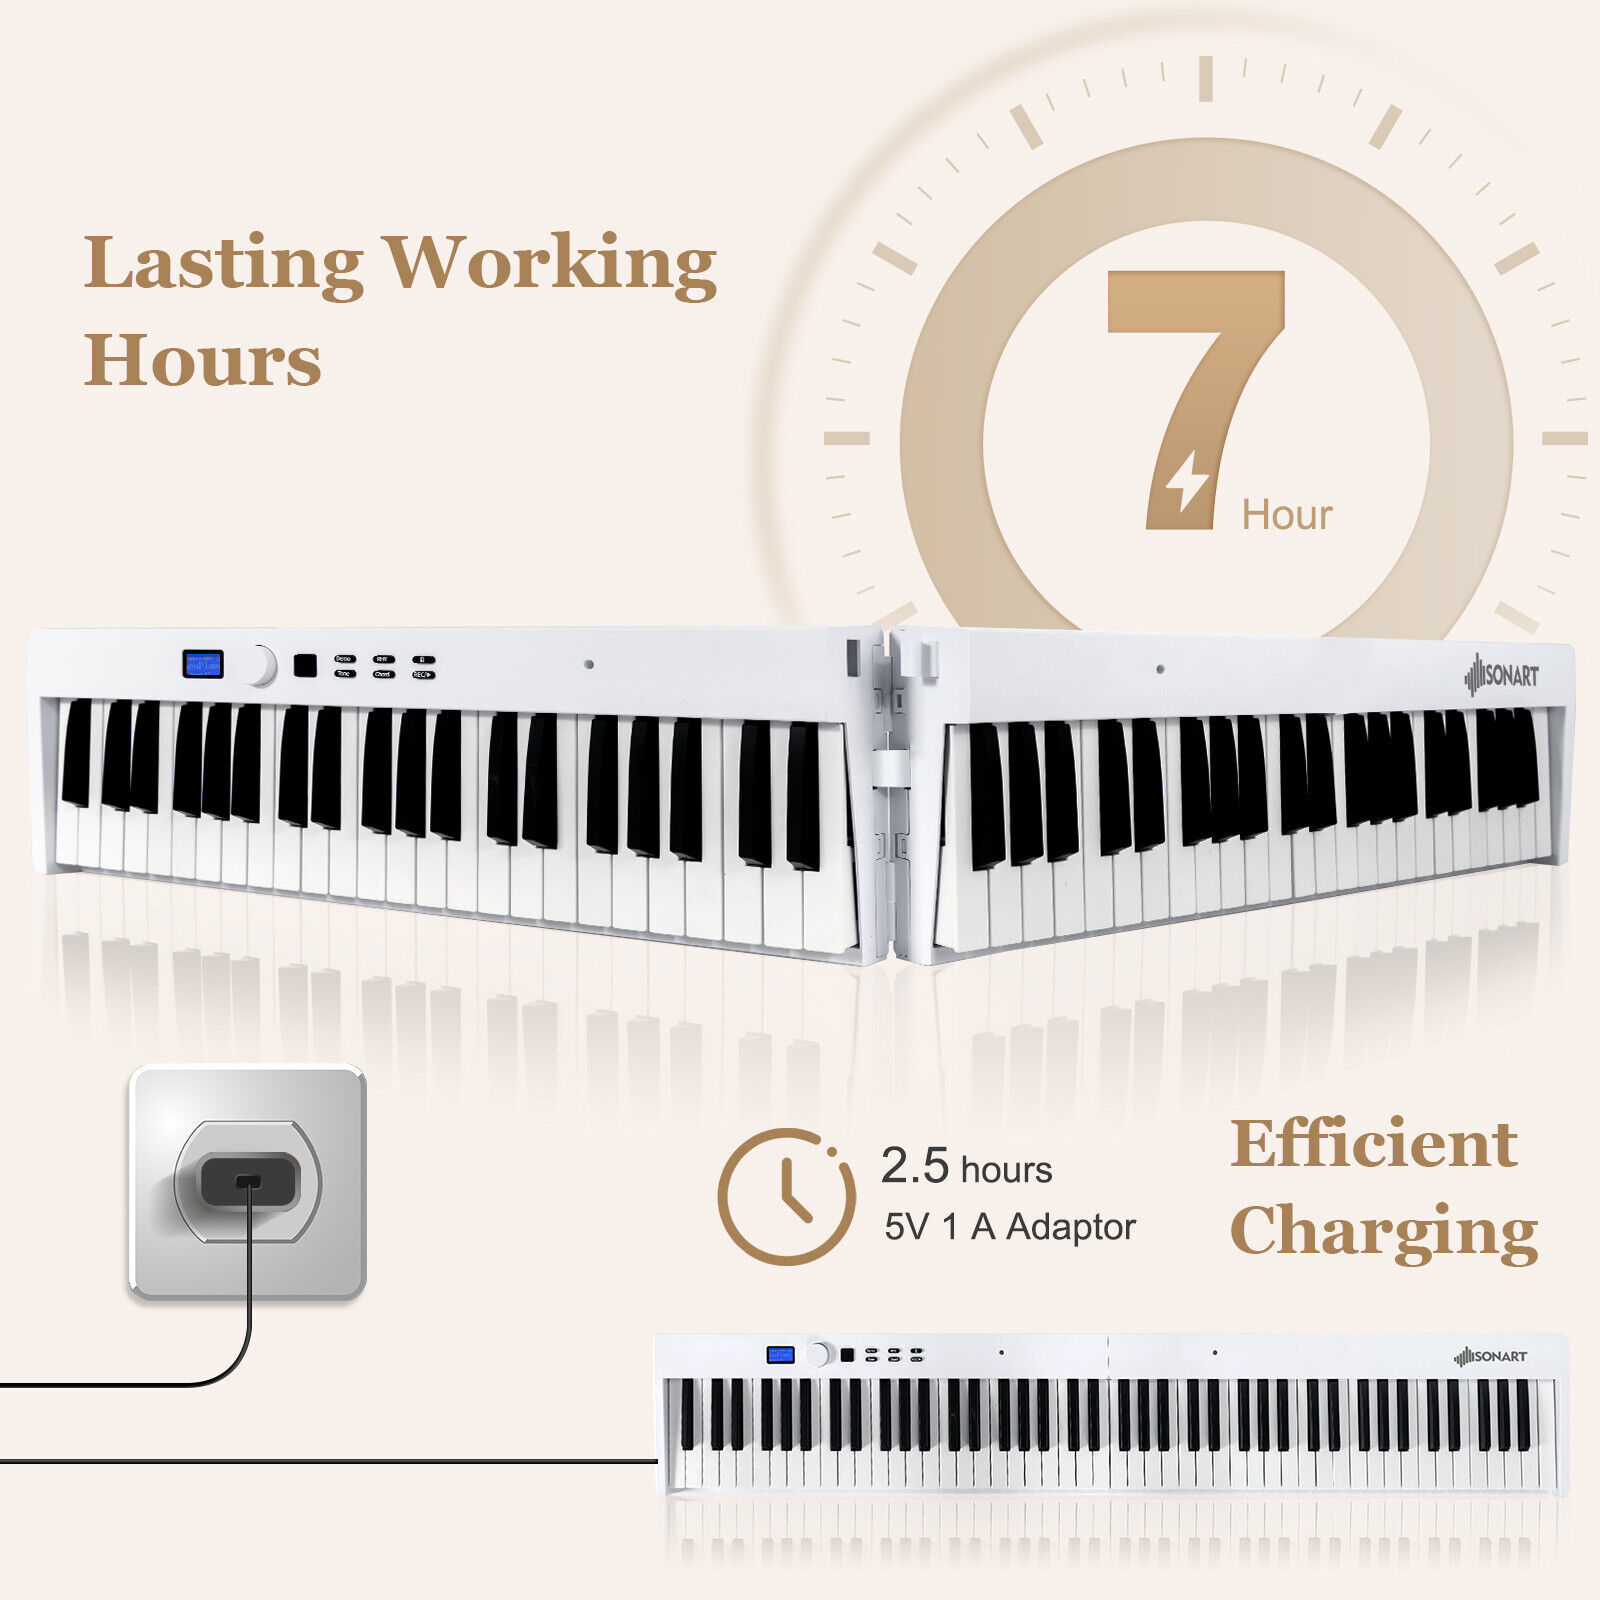 88-Key Folding Electric Piano Keyboard Semi Weighted Full Size MIDI Black